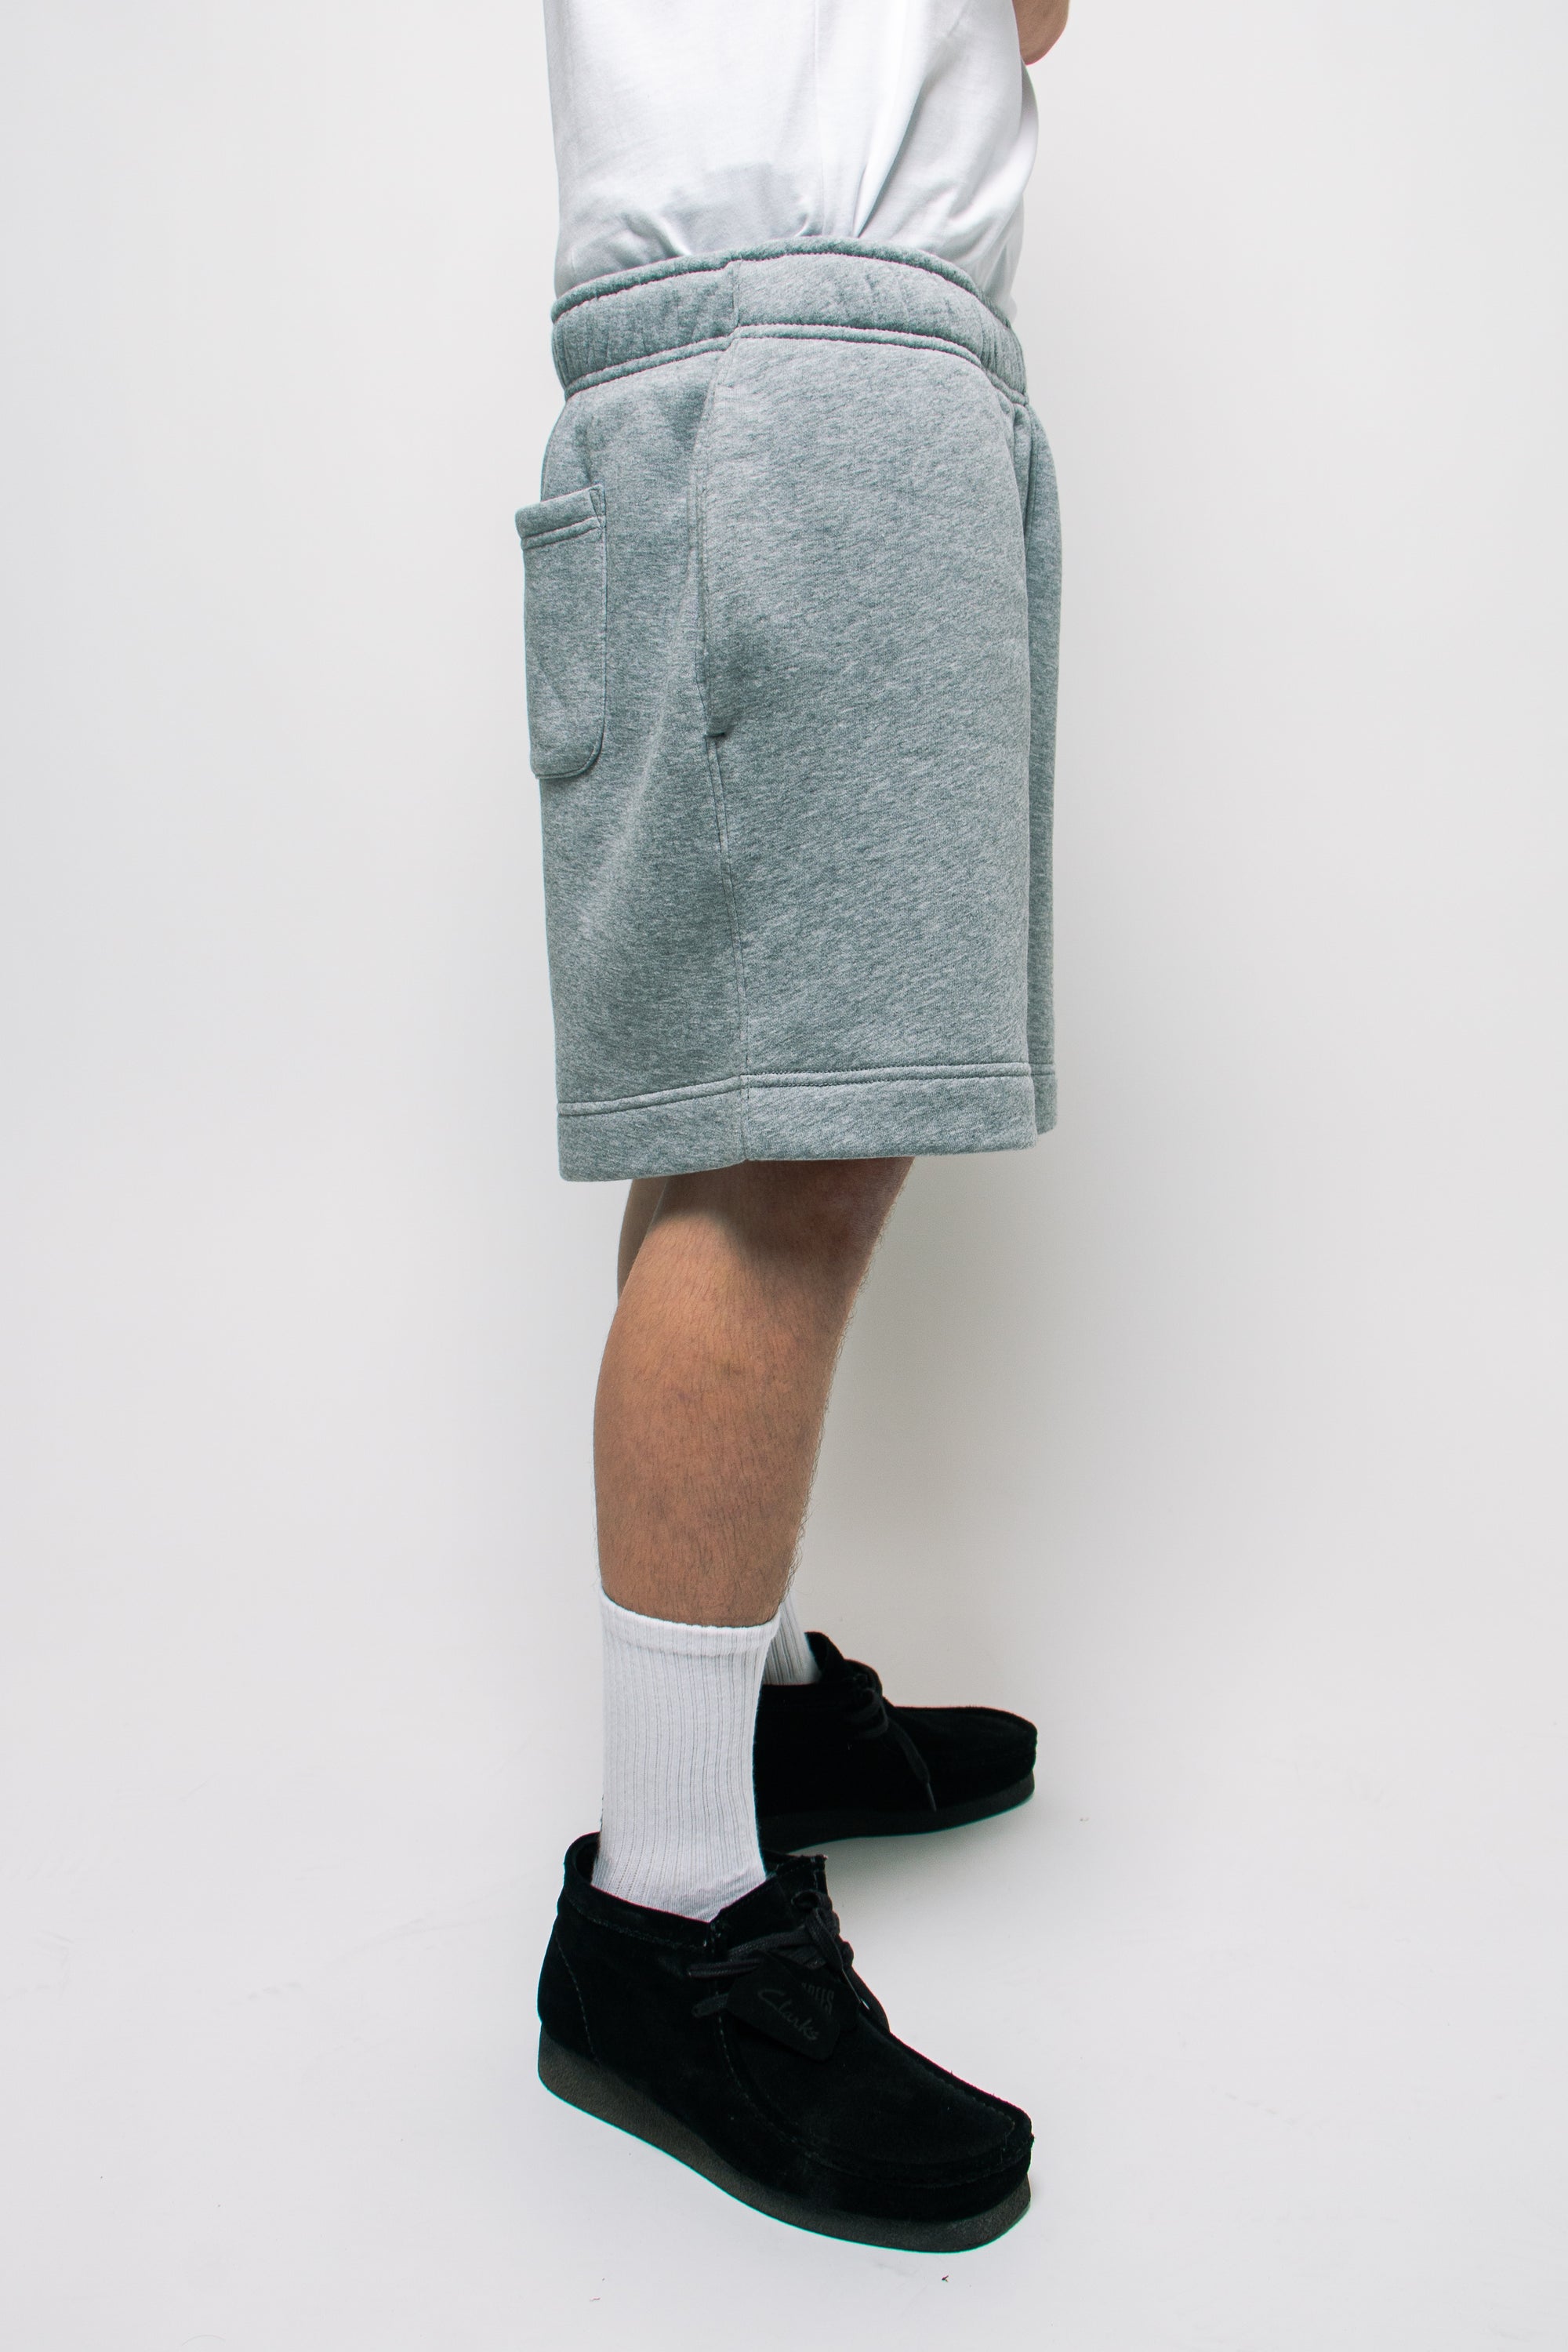 Stapld. Shorts - Grey